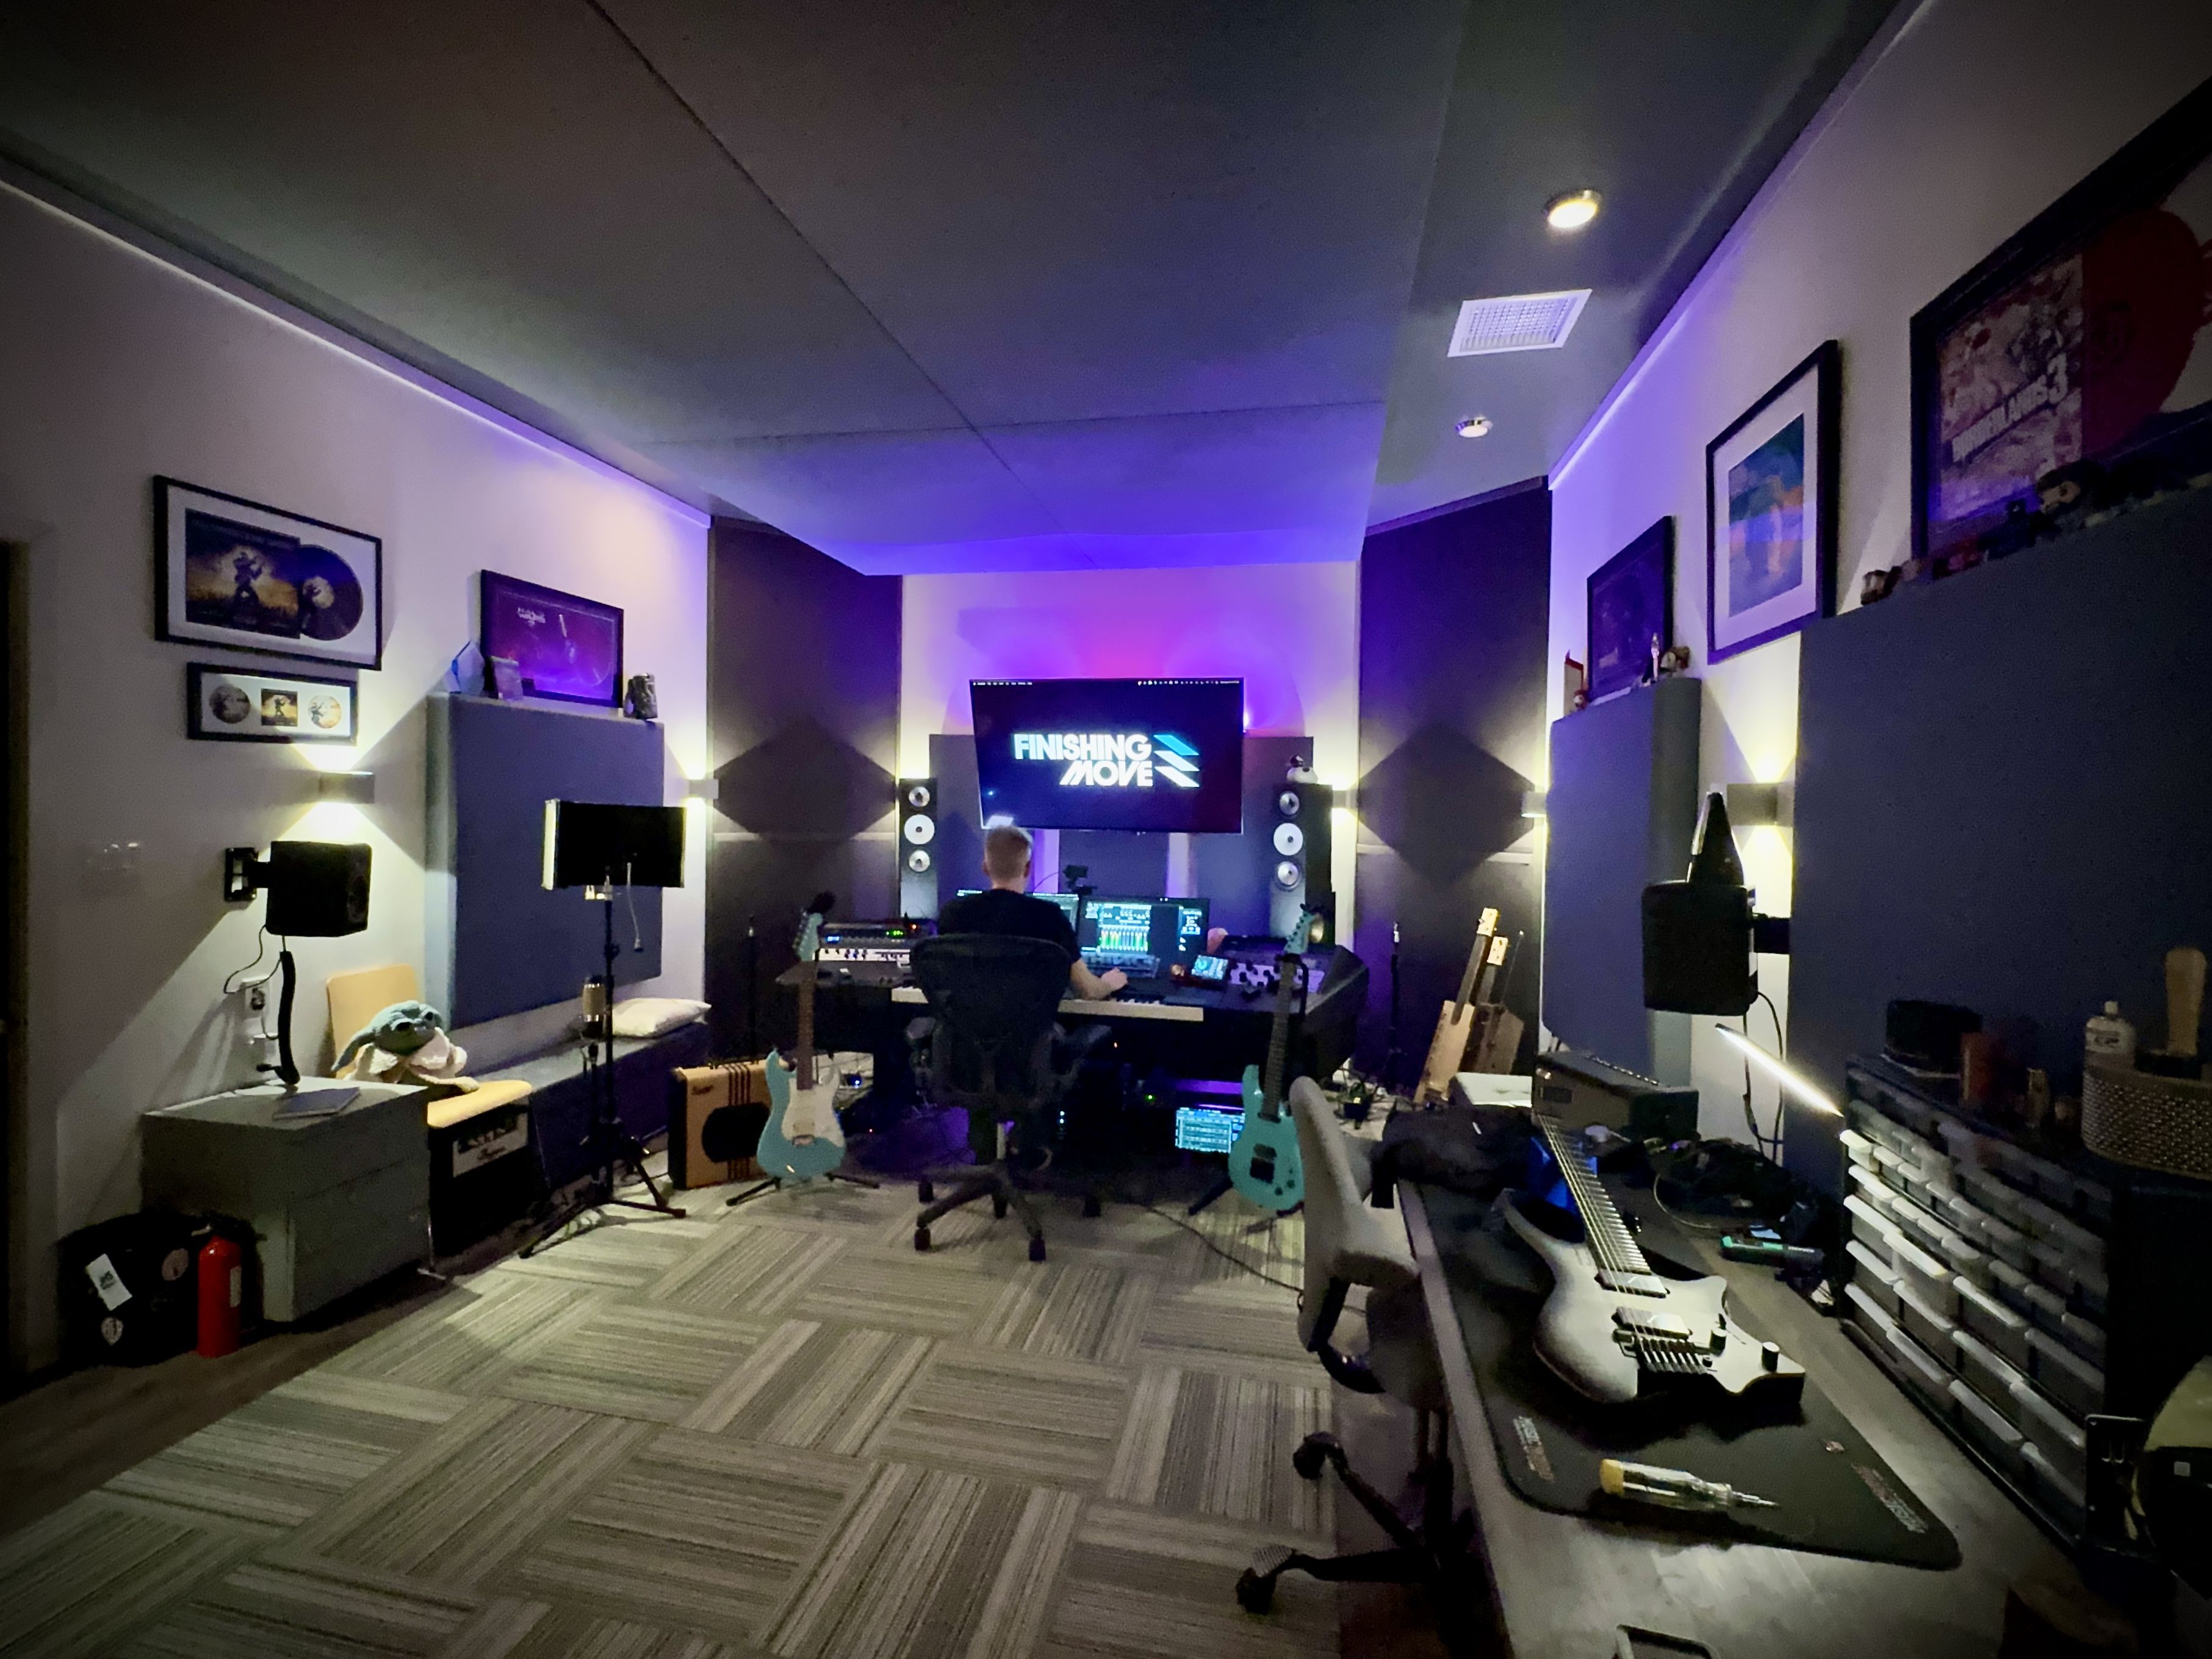 Brian White at work in his studio using the Amphion monitors